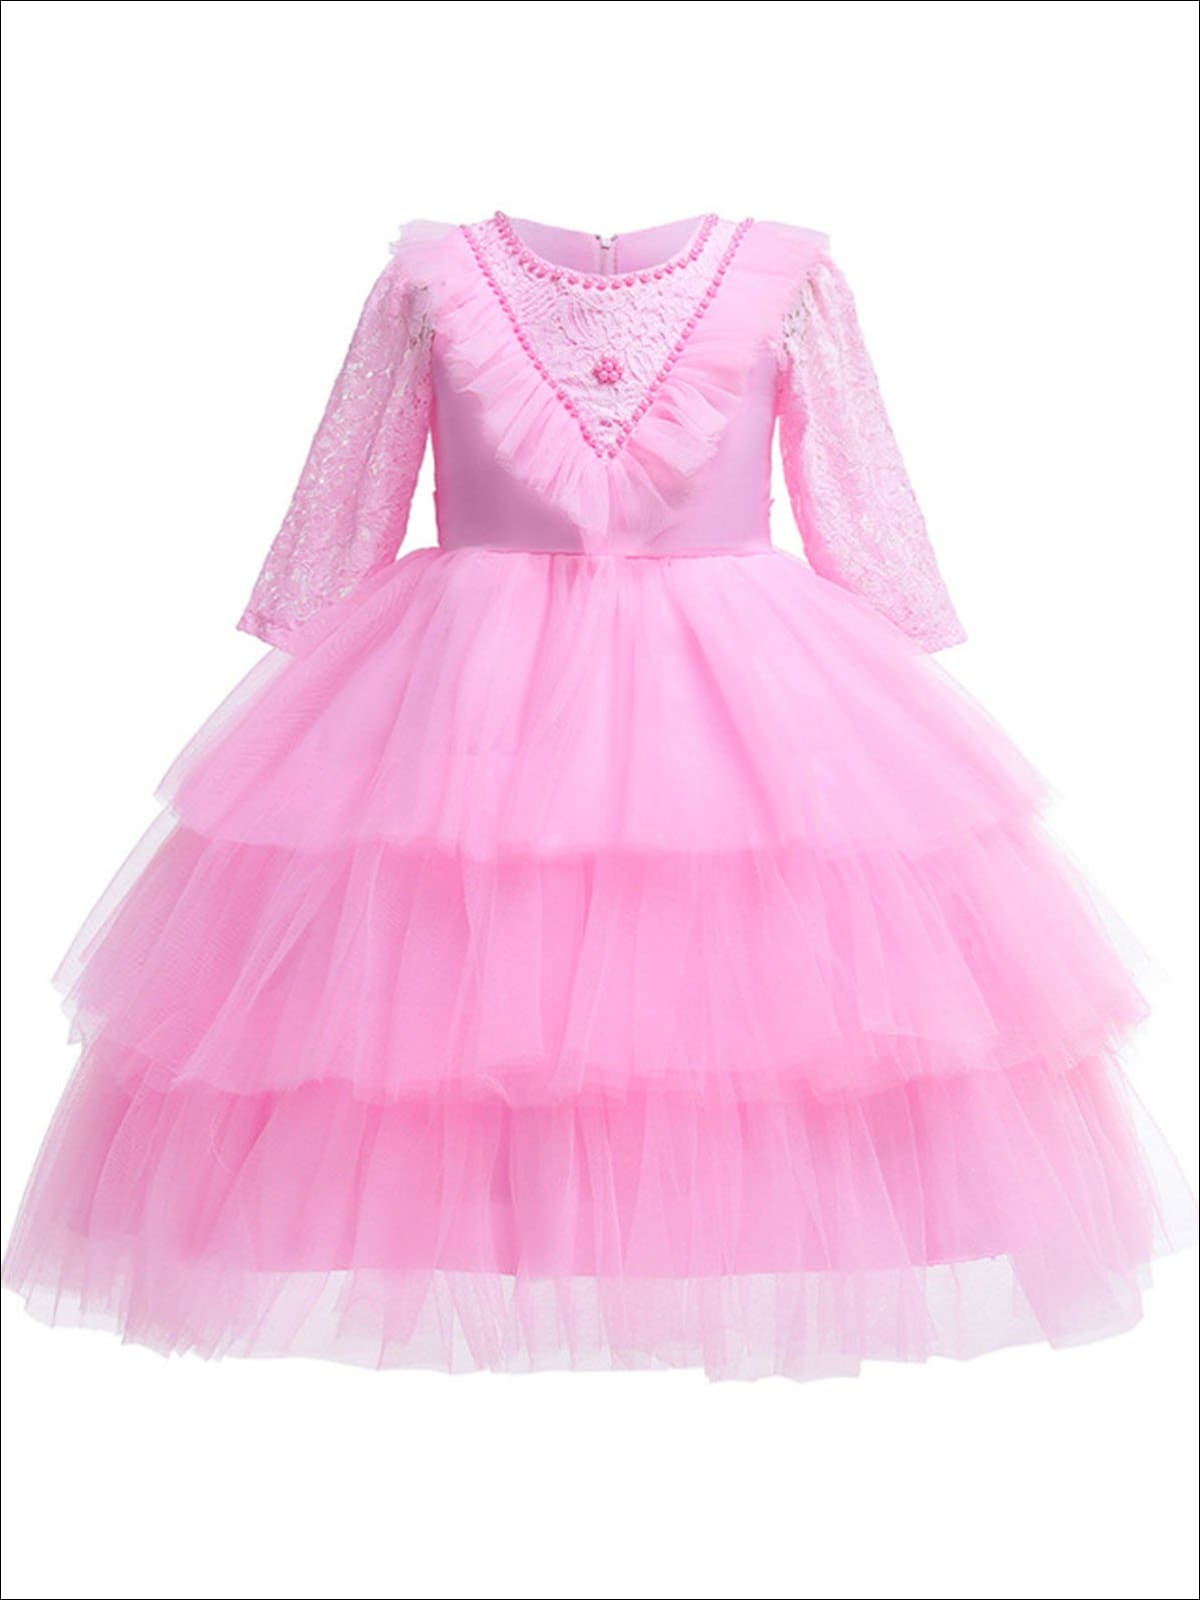 Girls Tiered Embellished Lace Dress - Pink / 2T - Girls Spring Dressy Dress